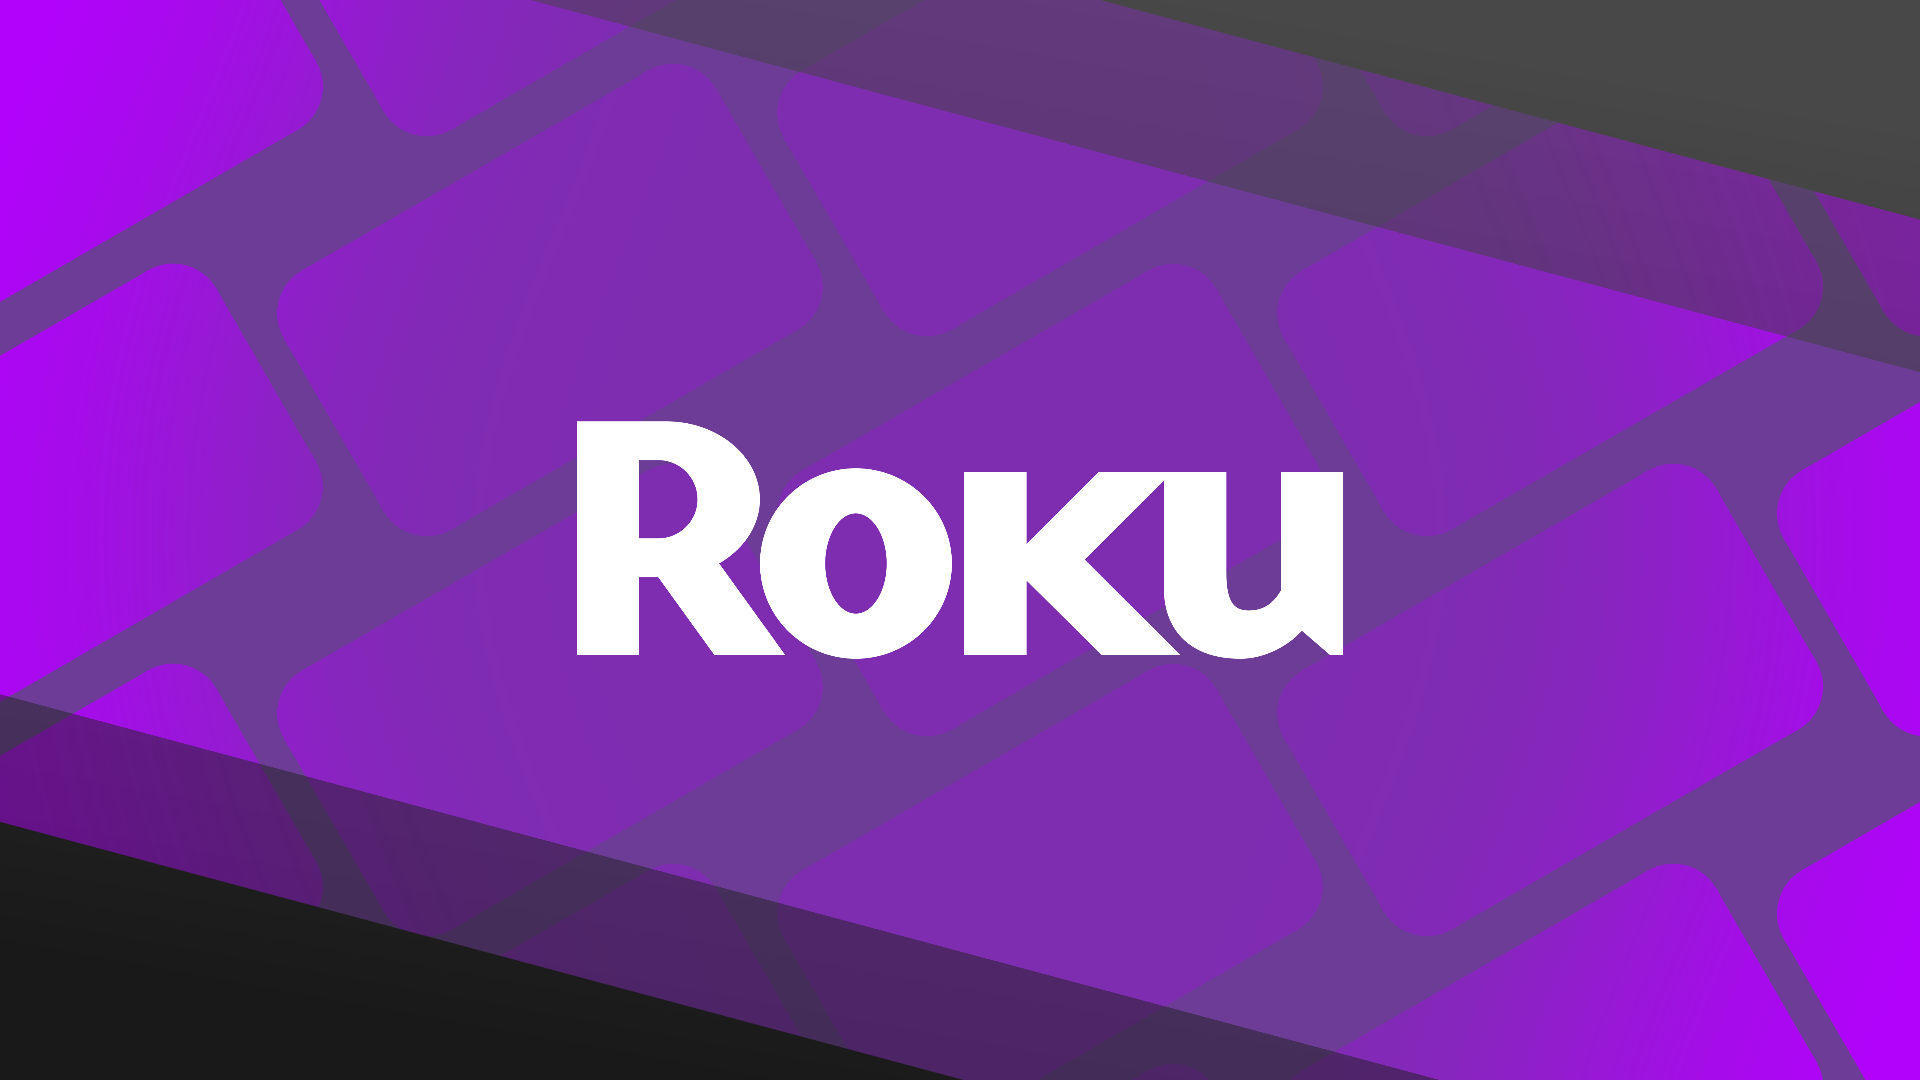 The Roku logo against a purple film roll